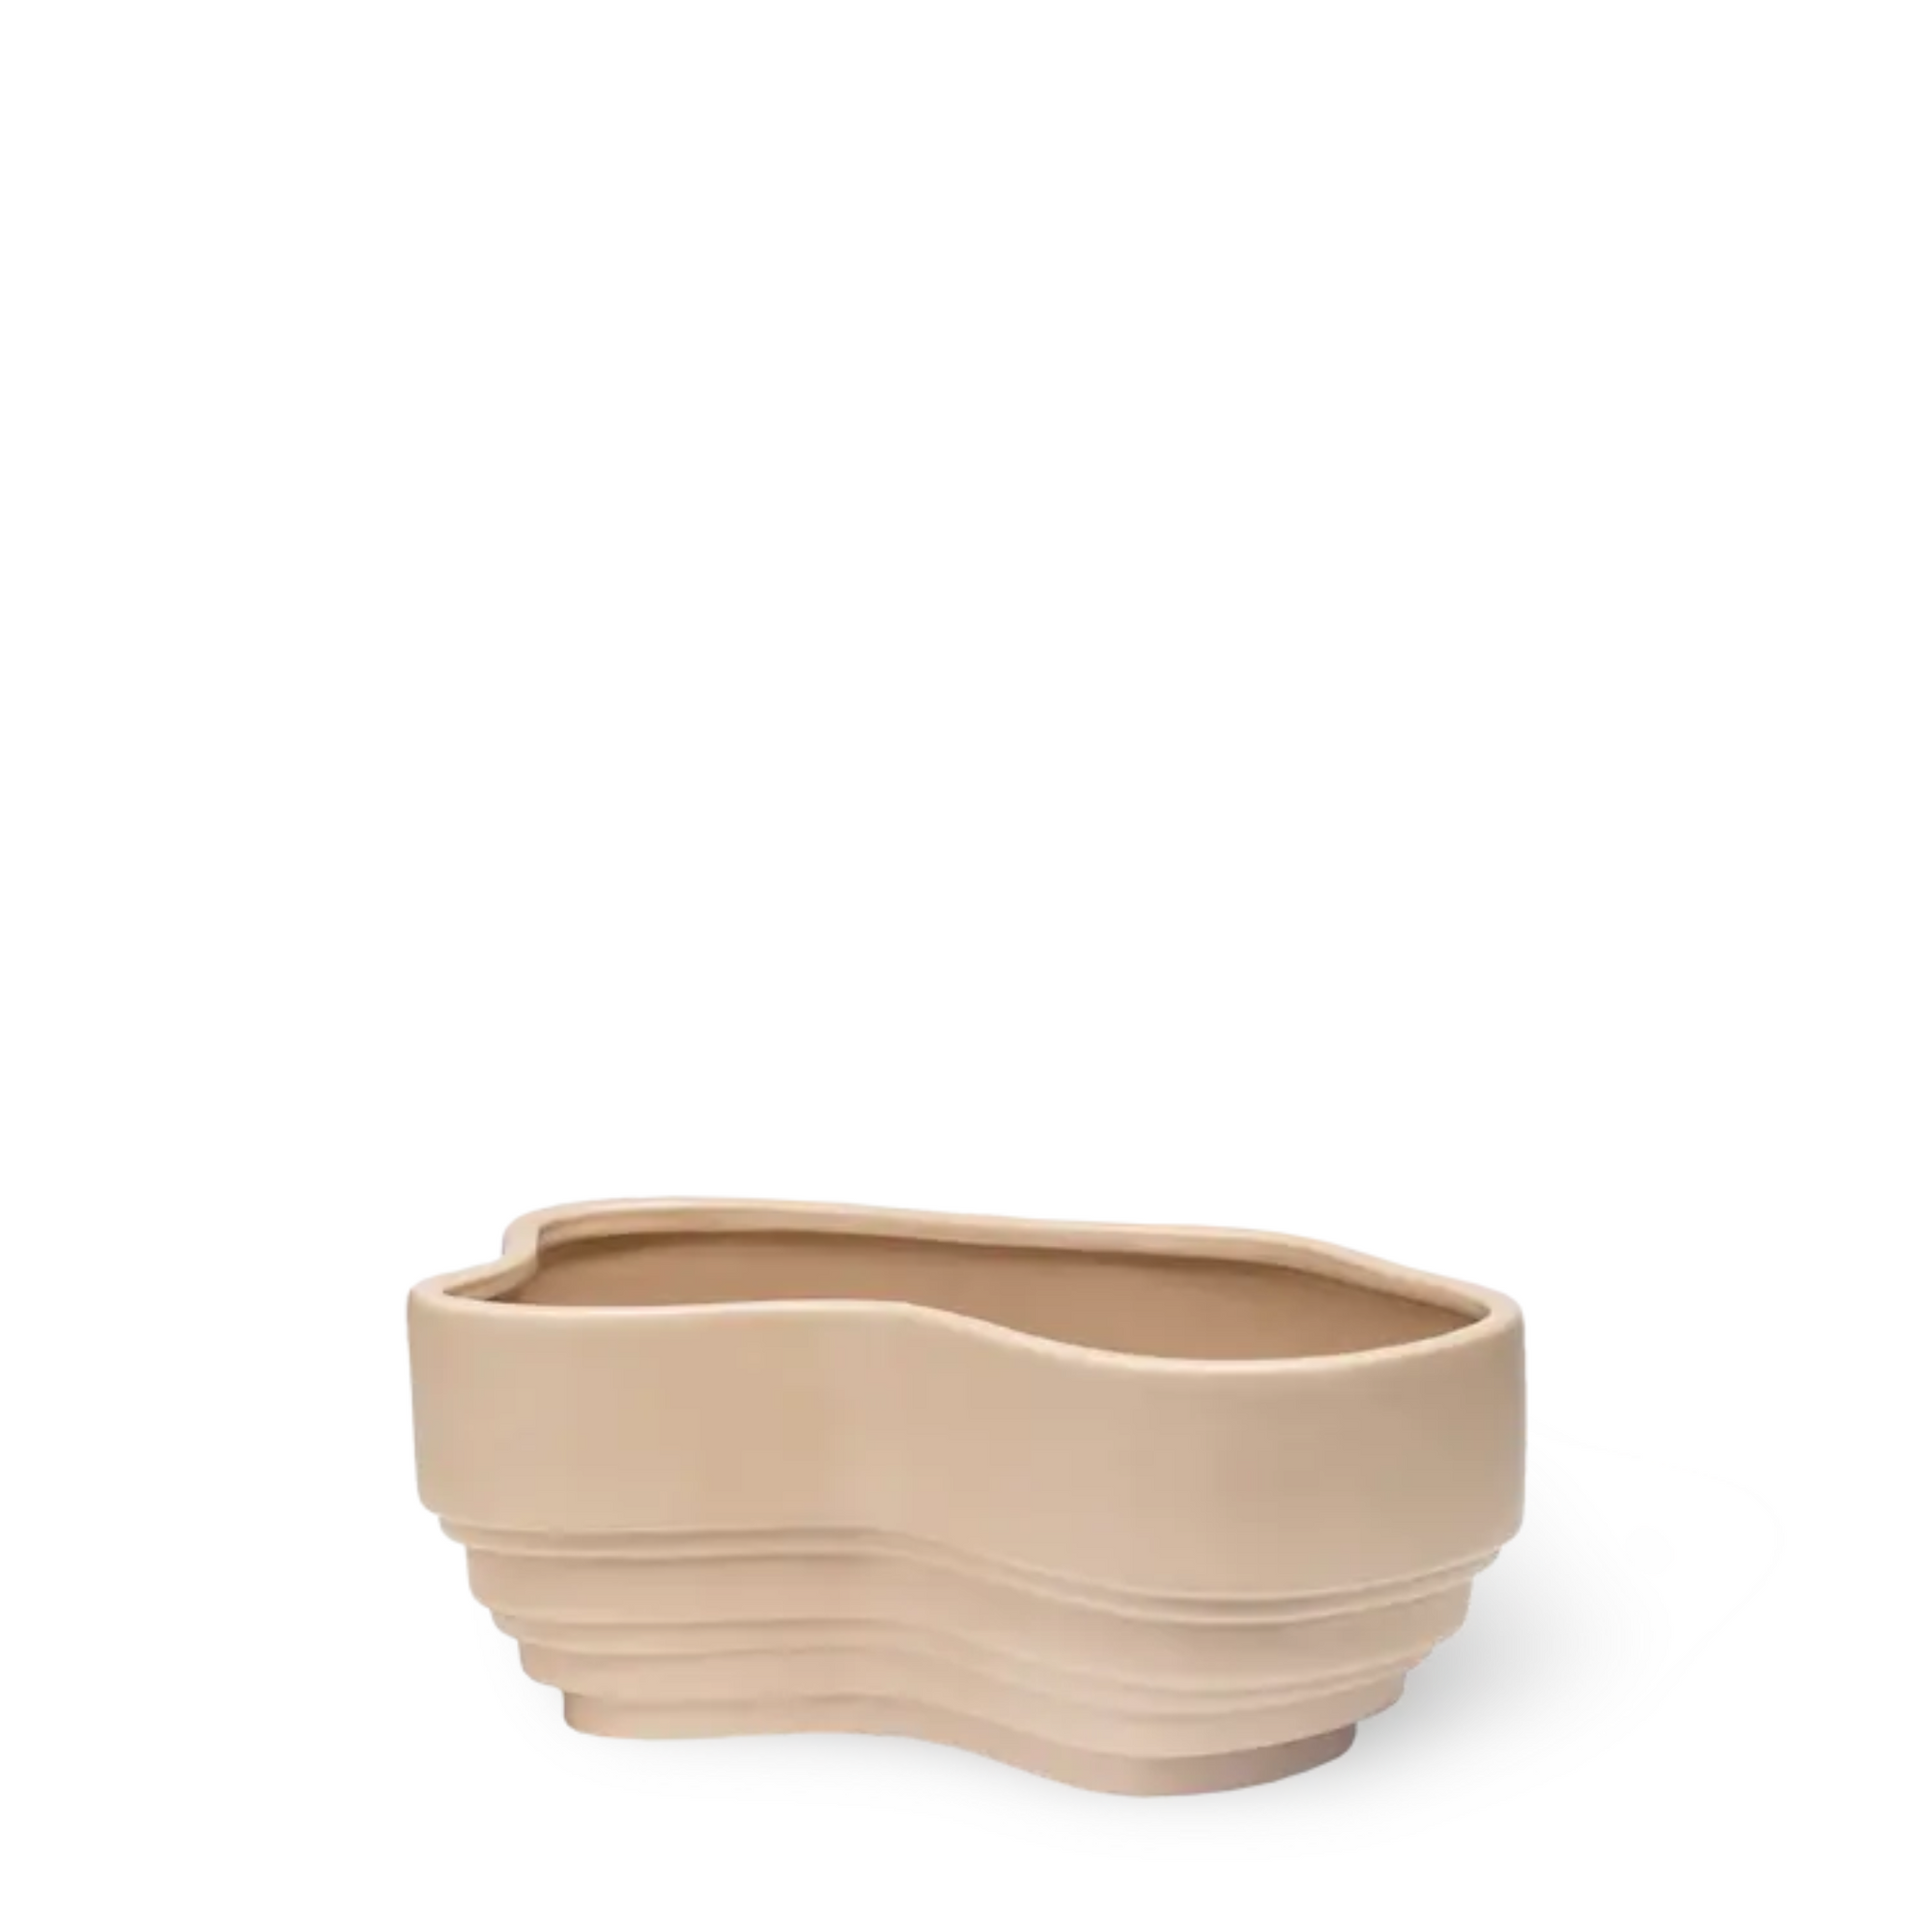 Lake ceramic bowl